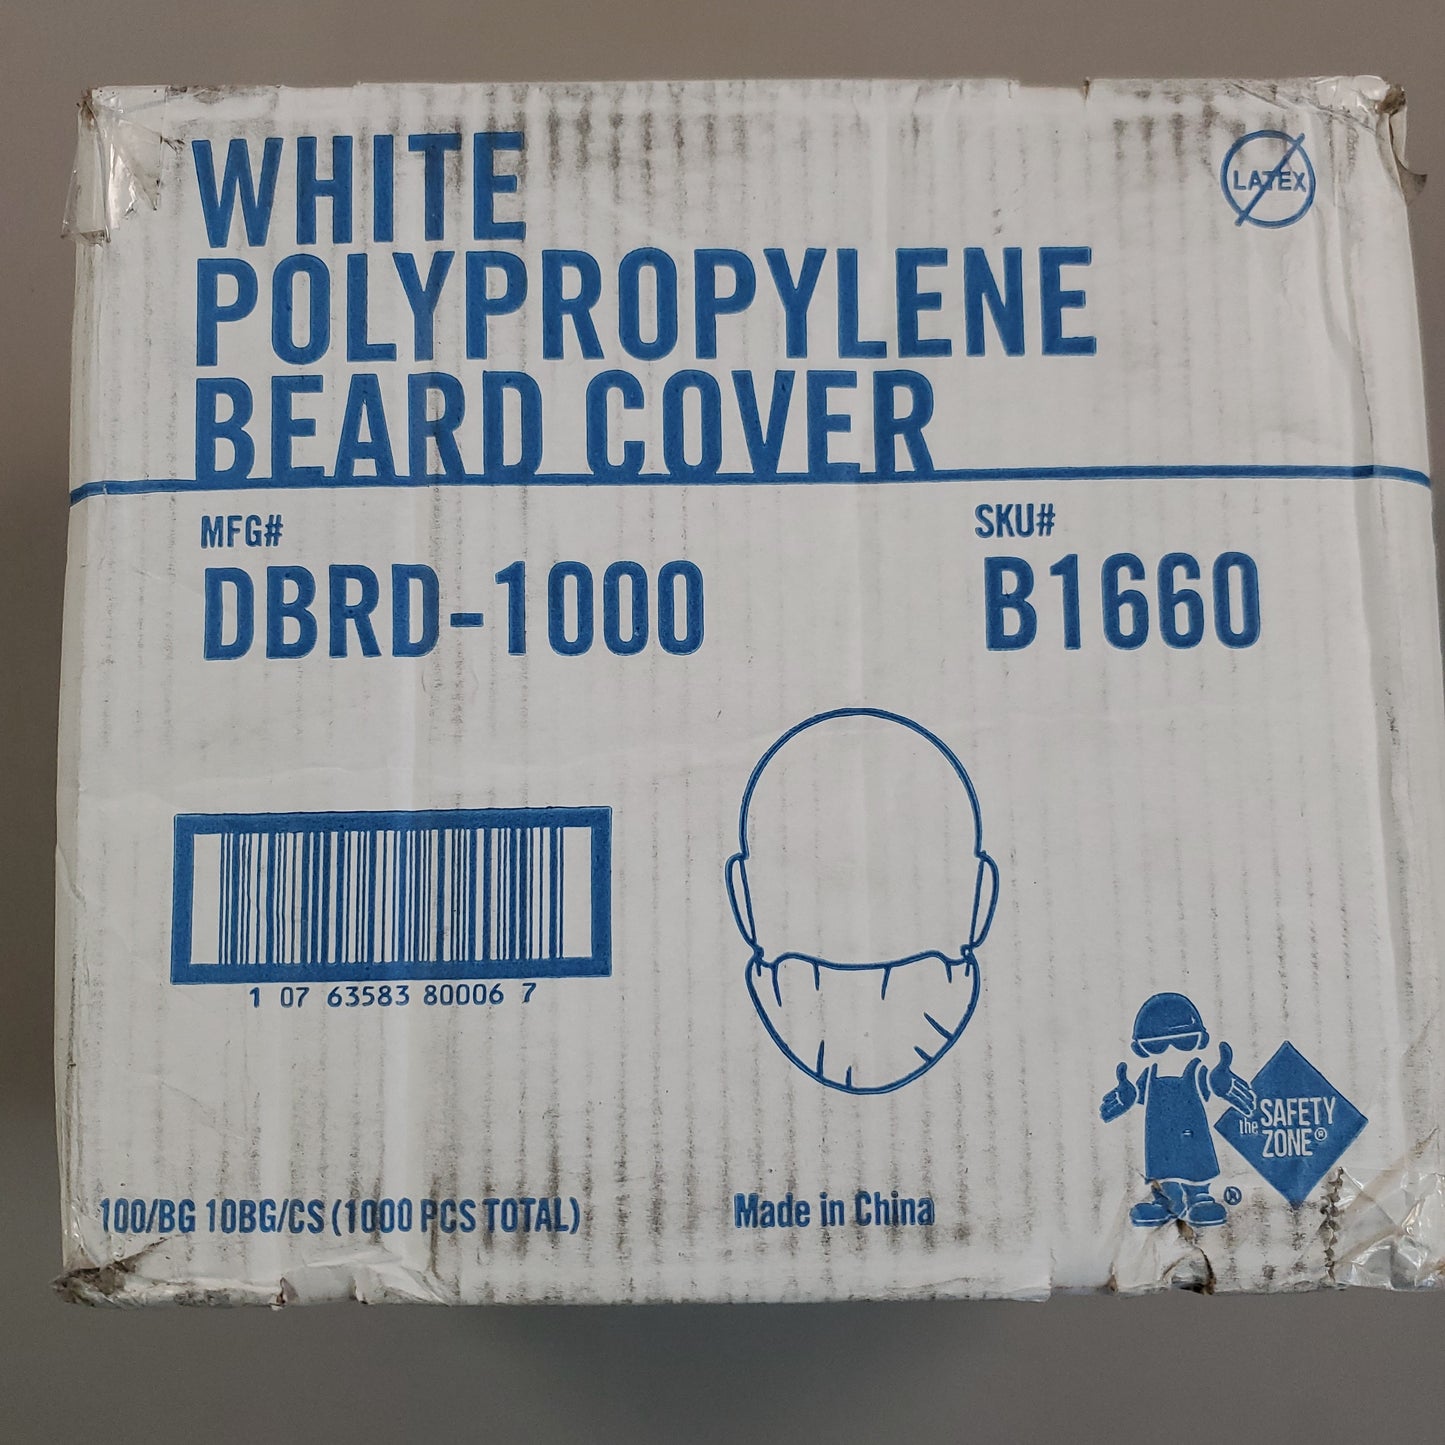 SAFETY ZONE Lot of 1000 Polypropylene Beard Covers White DBRD-1000 (New)